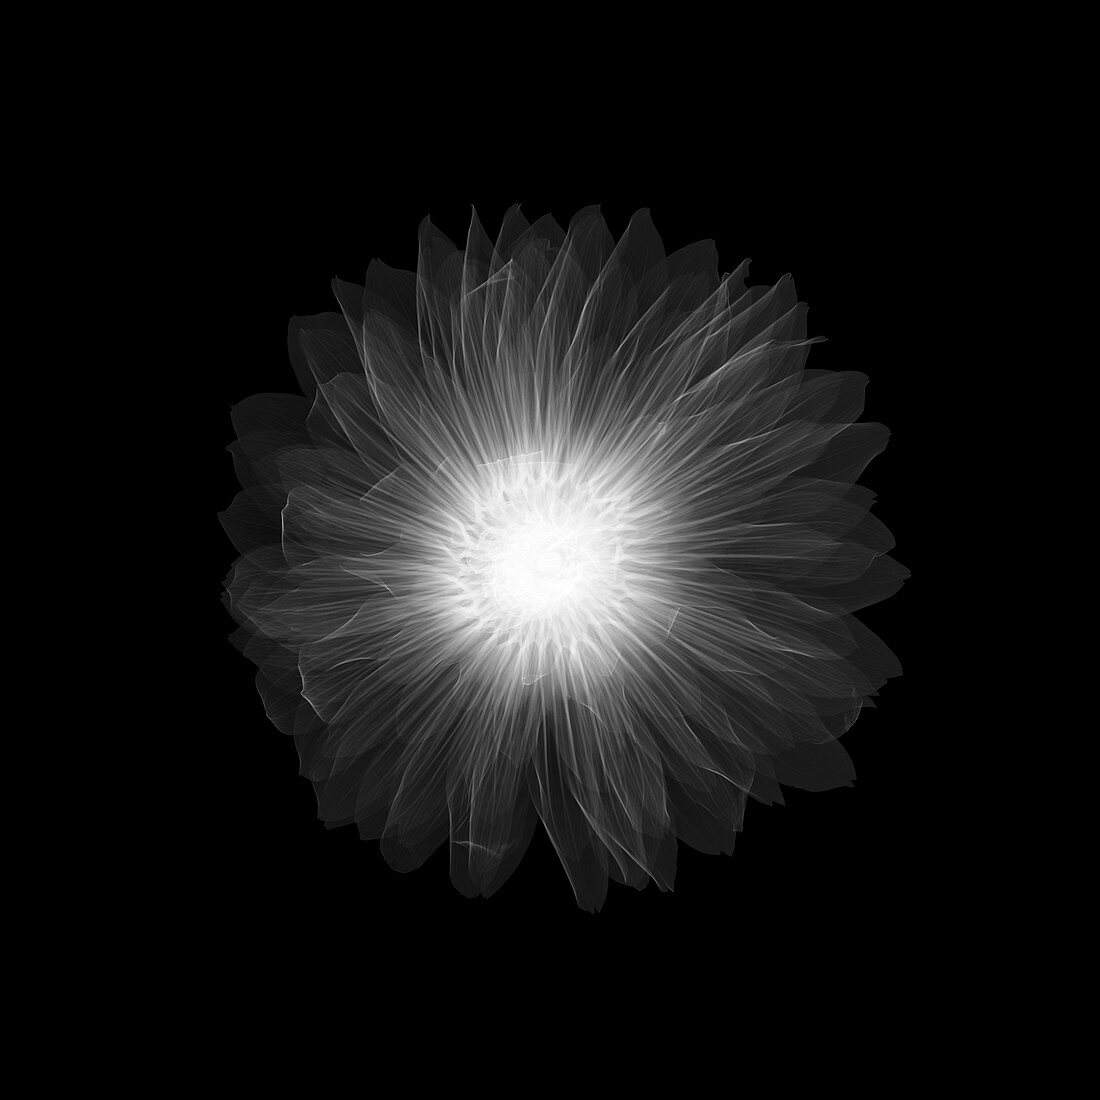 Dahlia 'Gallery Pablo' flower, X-ray